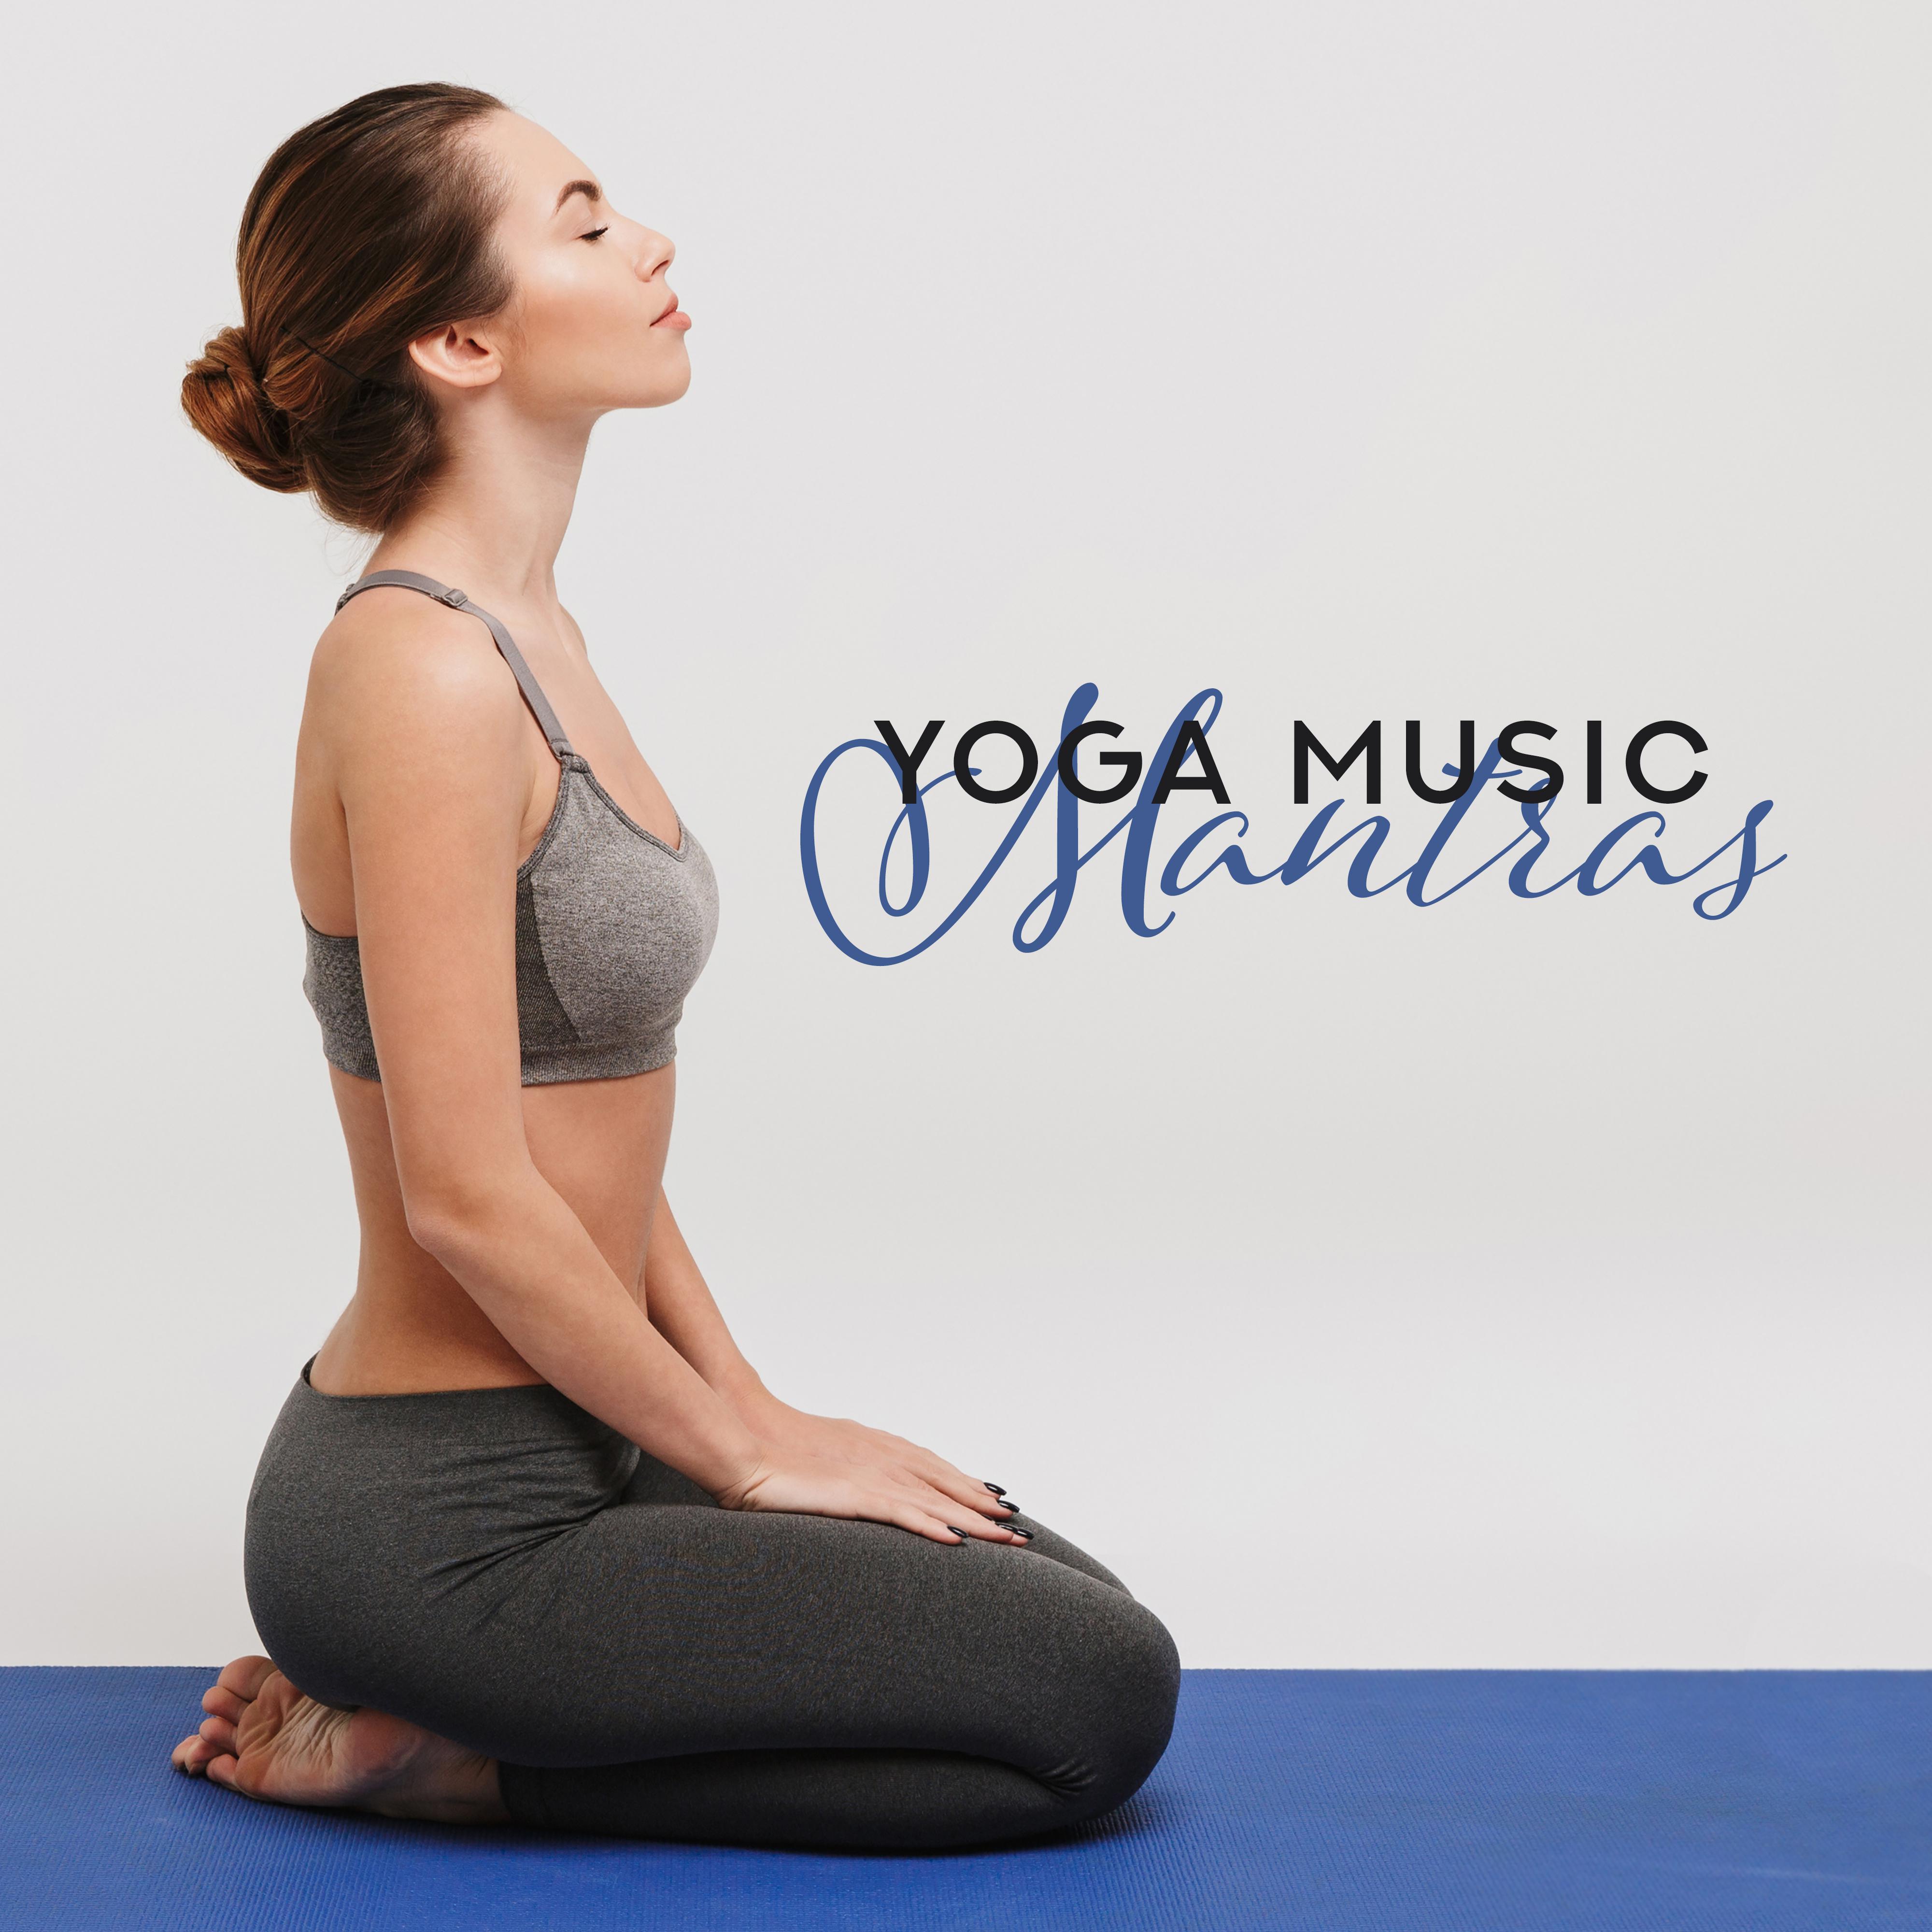 Yoga Music Mantras – Meditation Music Zone, Healing Yoga Sounds, Relaxing Music for Training Yoga, Deep Meditation, Inner Harmony, Deep Relaxation